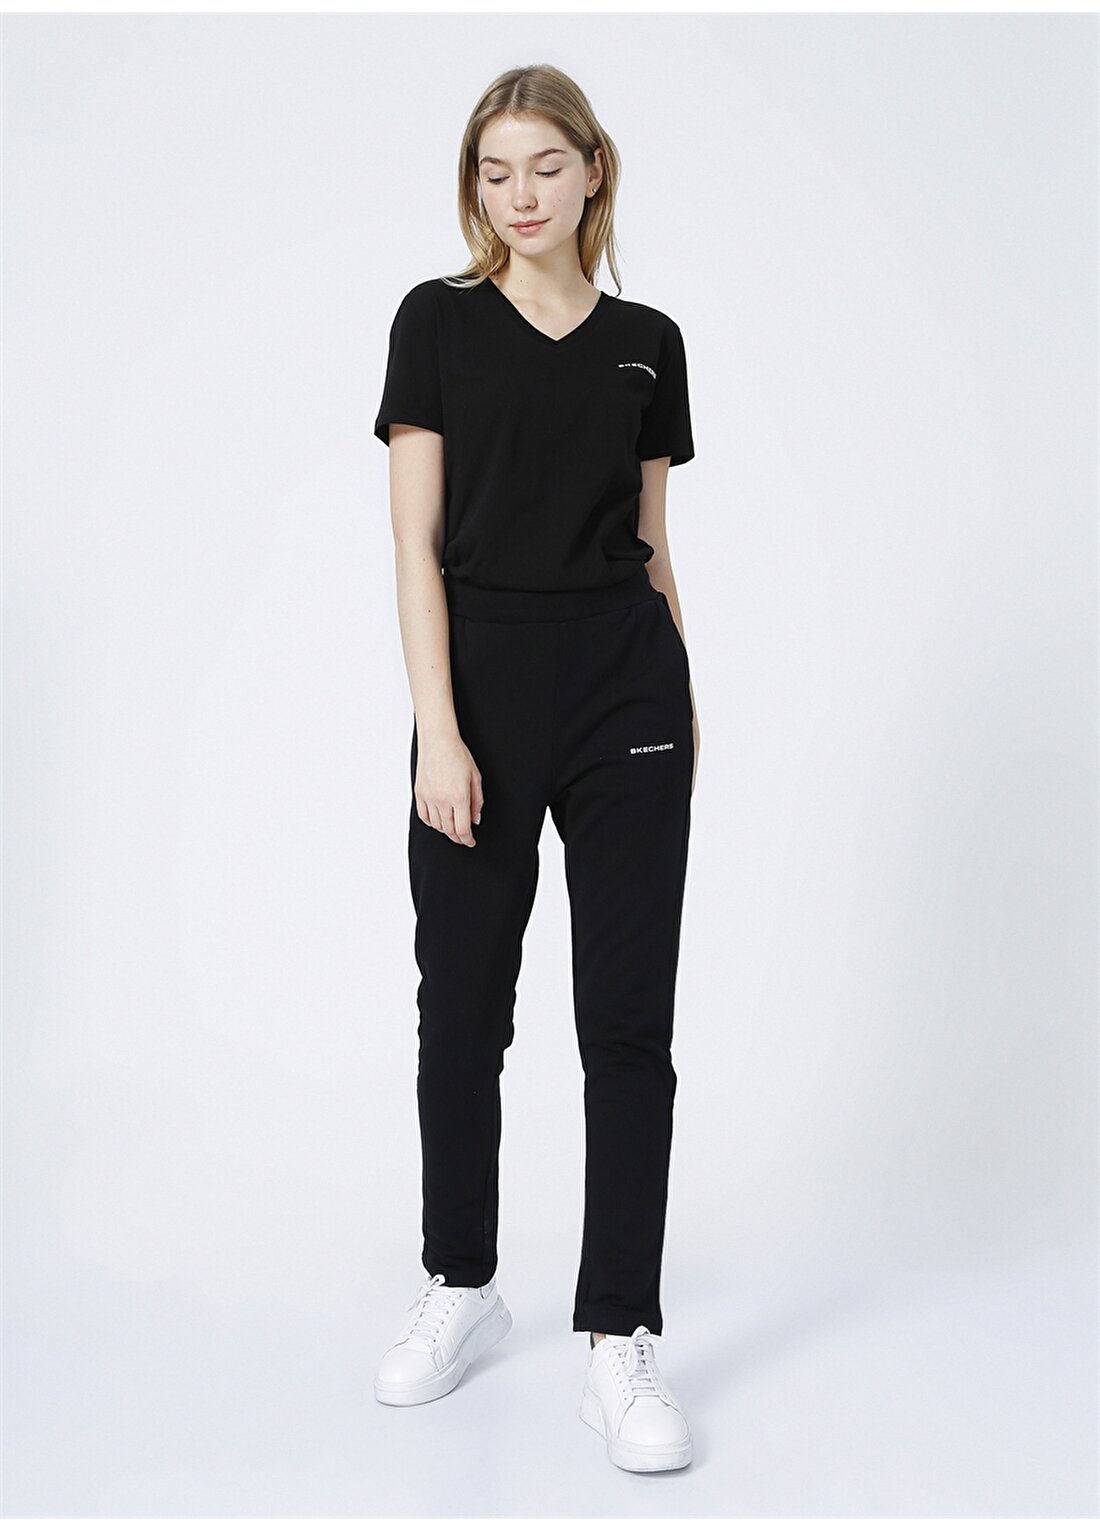 Skechers S212185-001 New Basics W Slim Pant Lastikli Slim Fit Düz Siyah Kadın Eşofman Altı